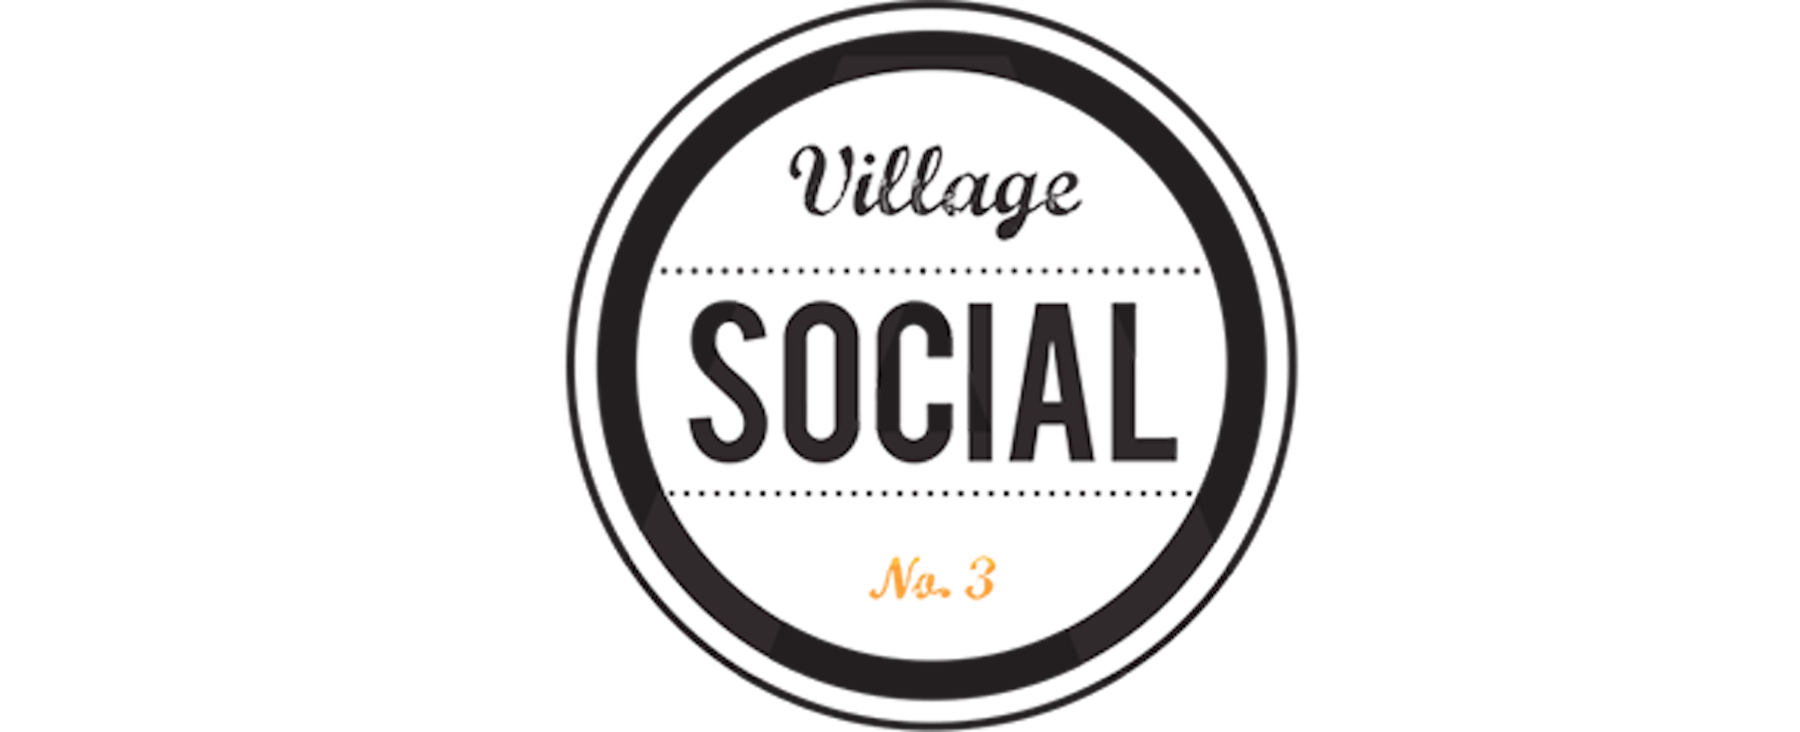 Village Social .png